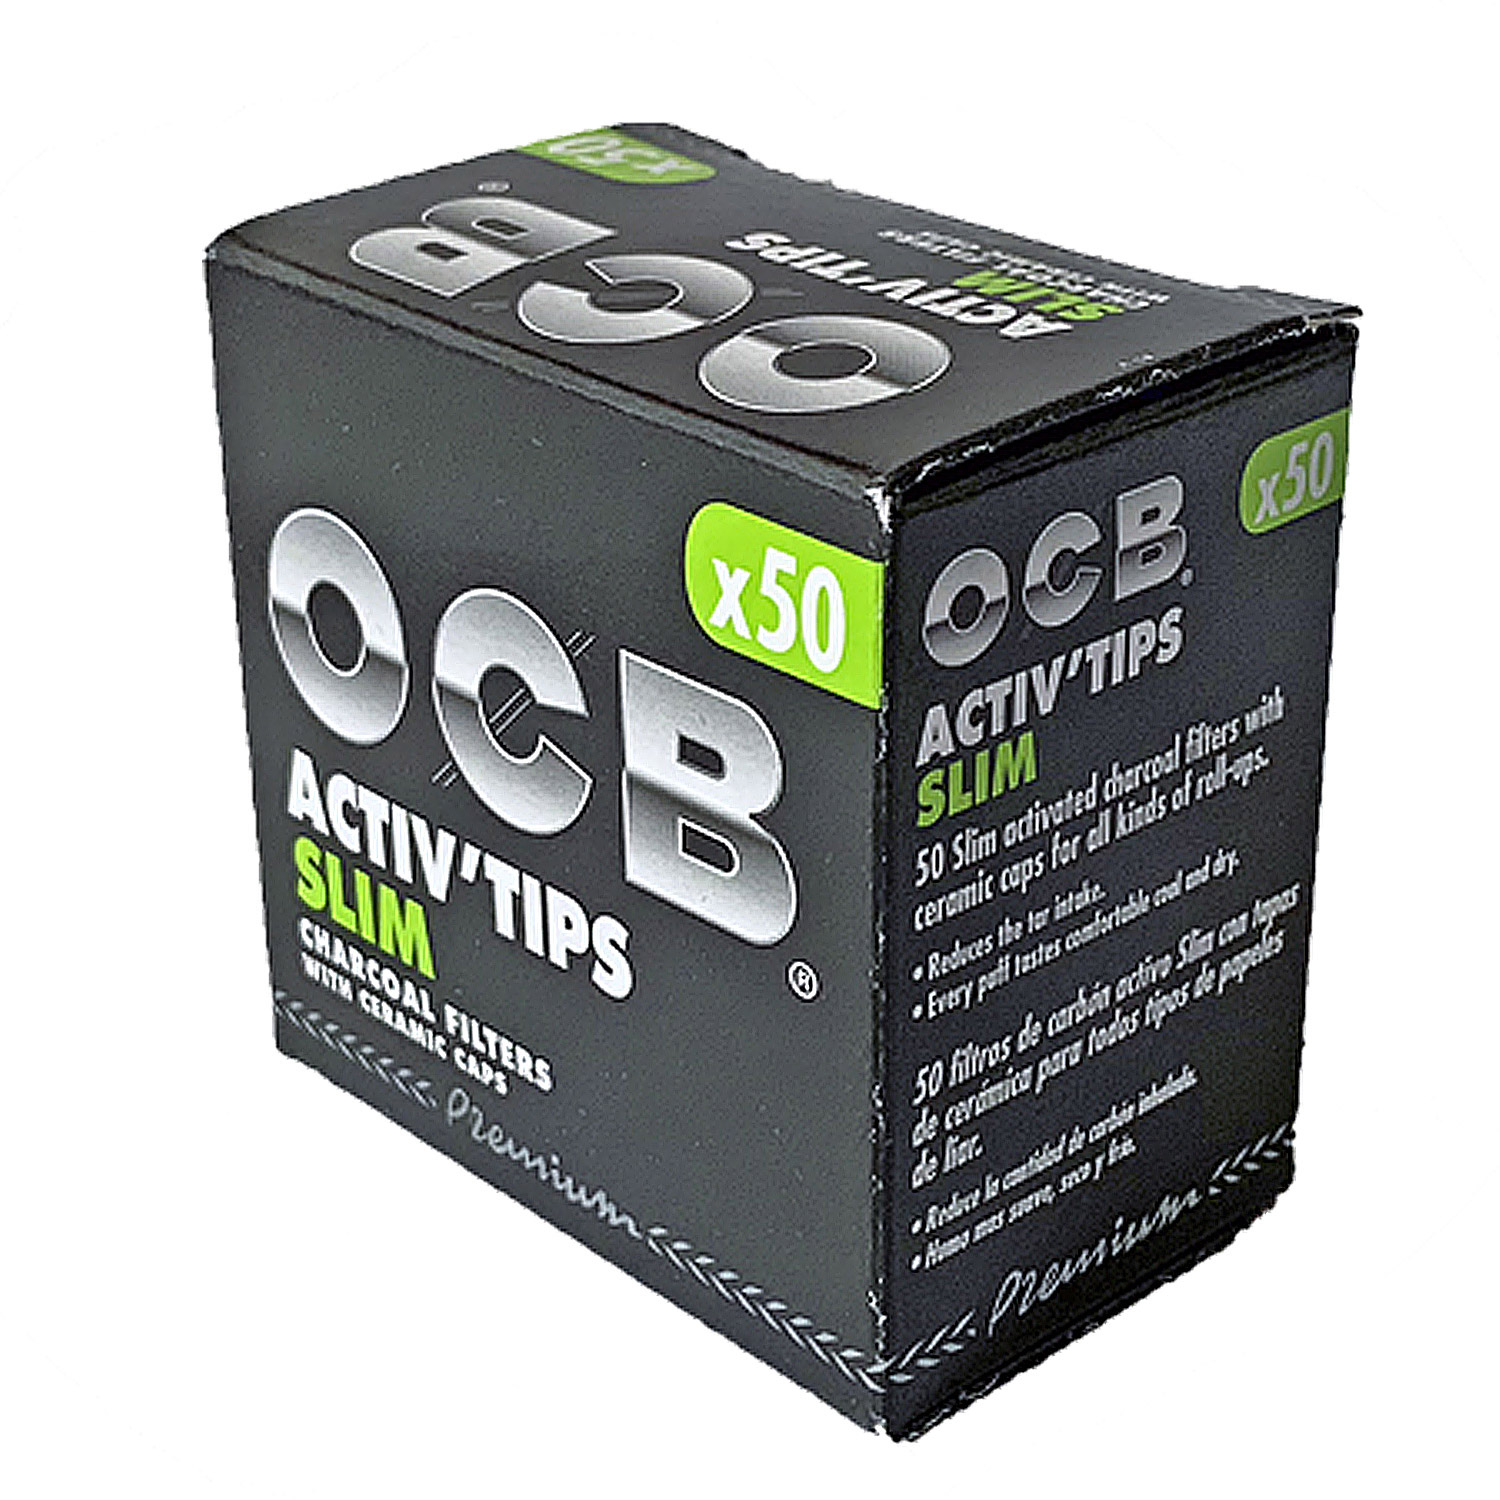 OCB Activ Tips Slim / Aktivkohle Slim Filter 7mm, 50 Stück